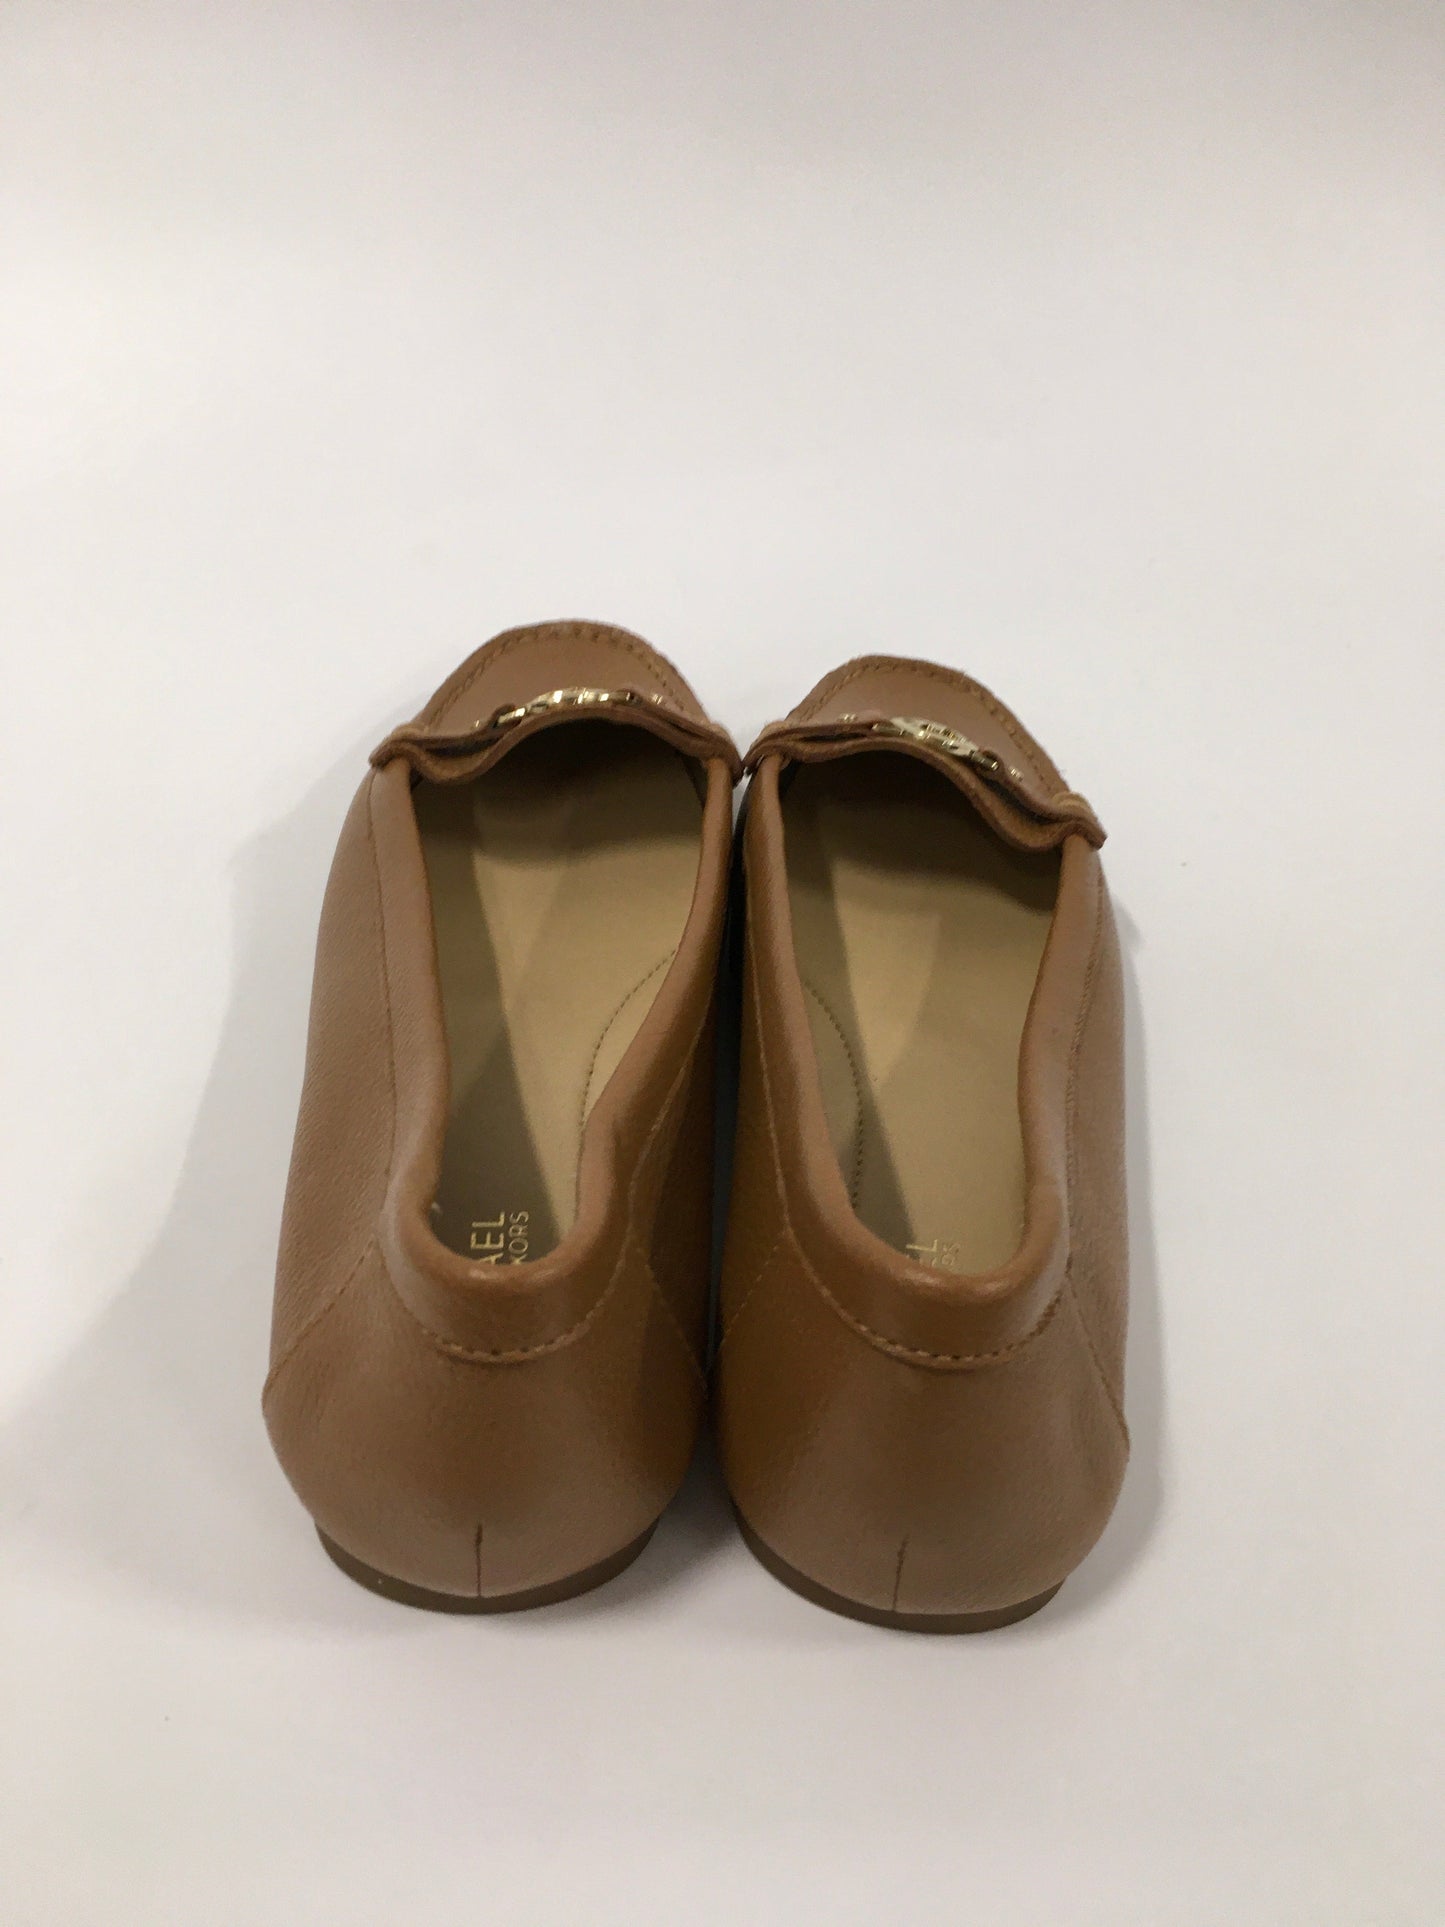 Tan Shoes Flats Ballet Michael By Michael Kors, Size 6.5